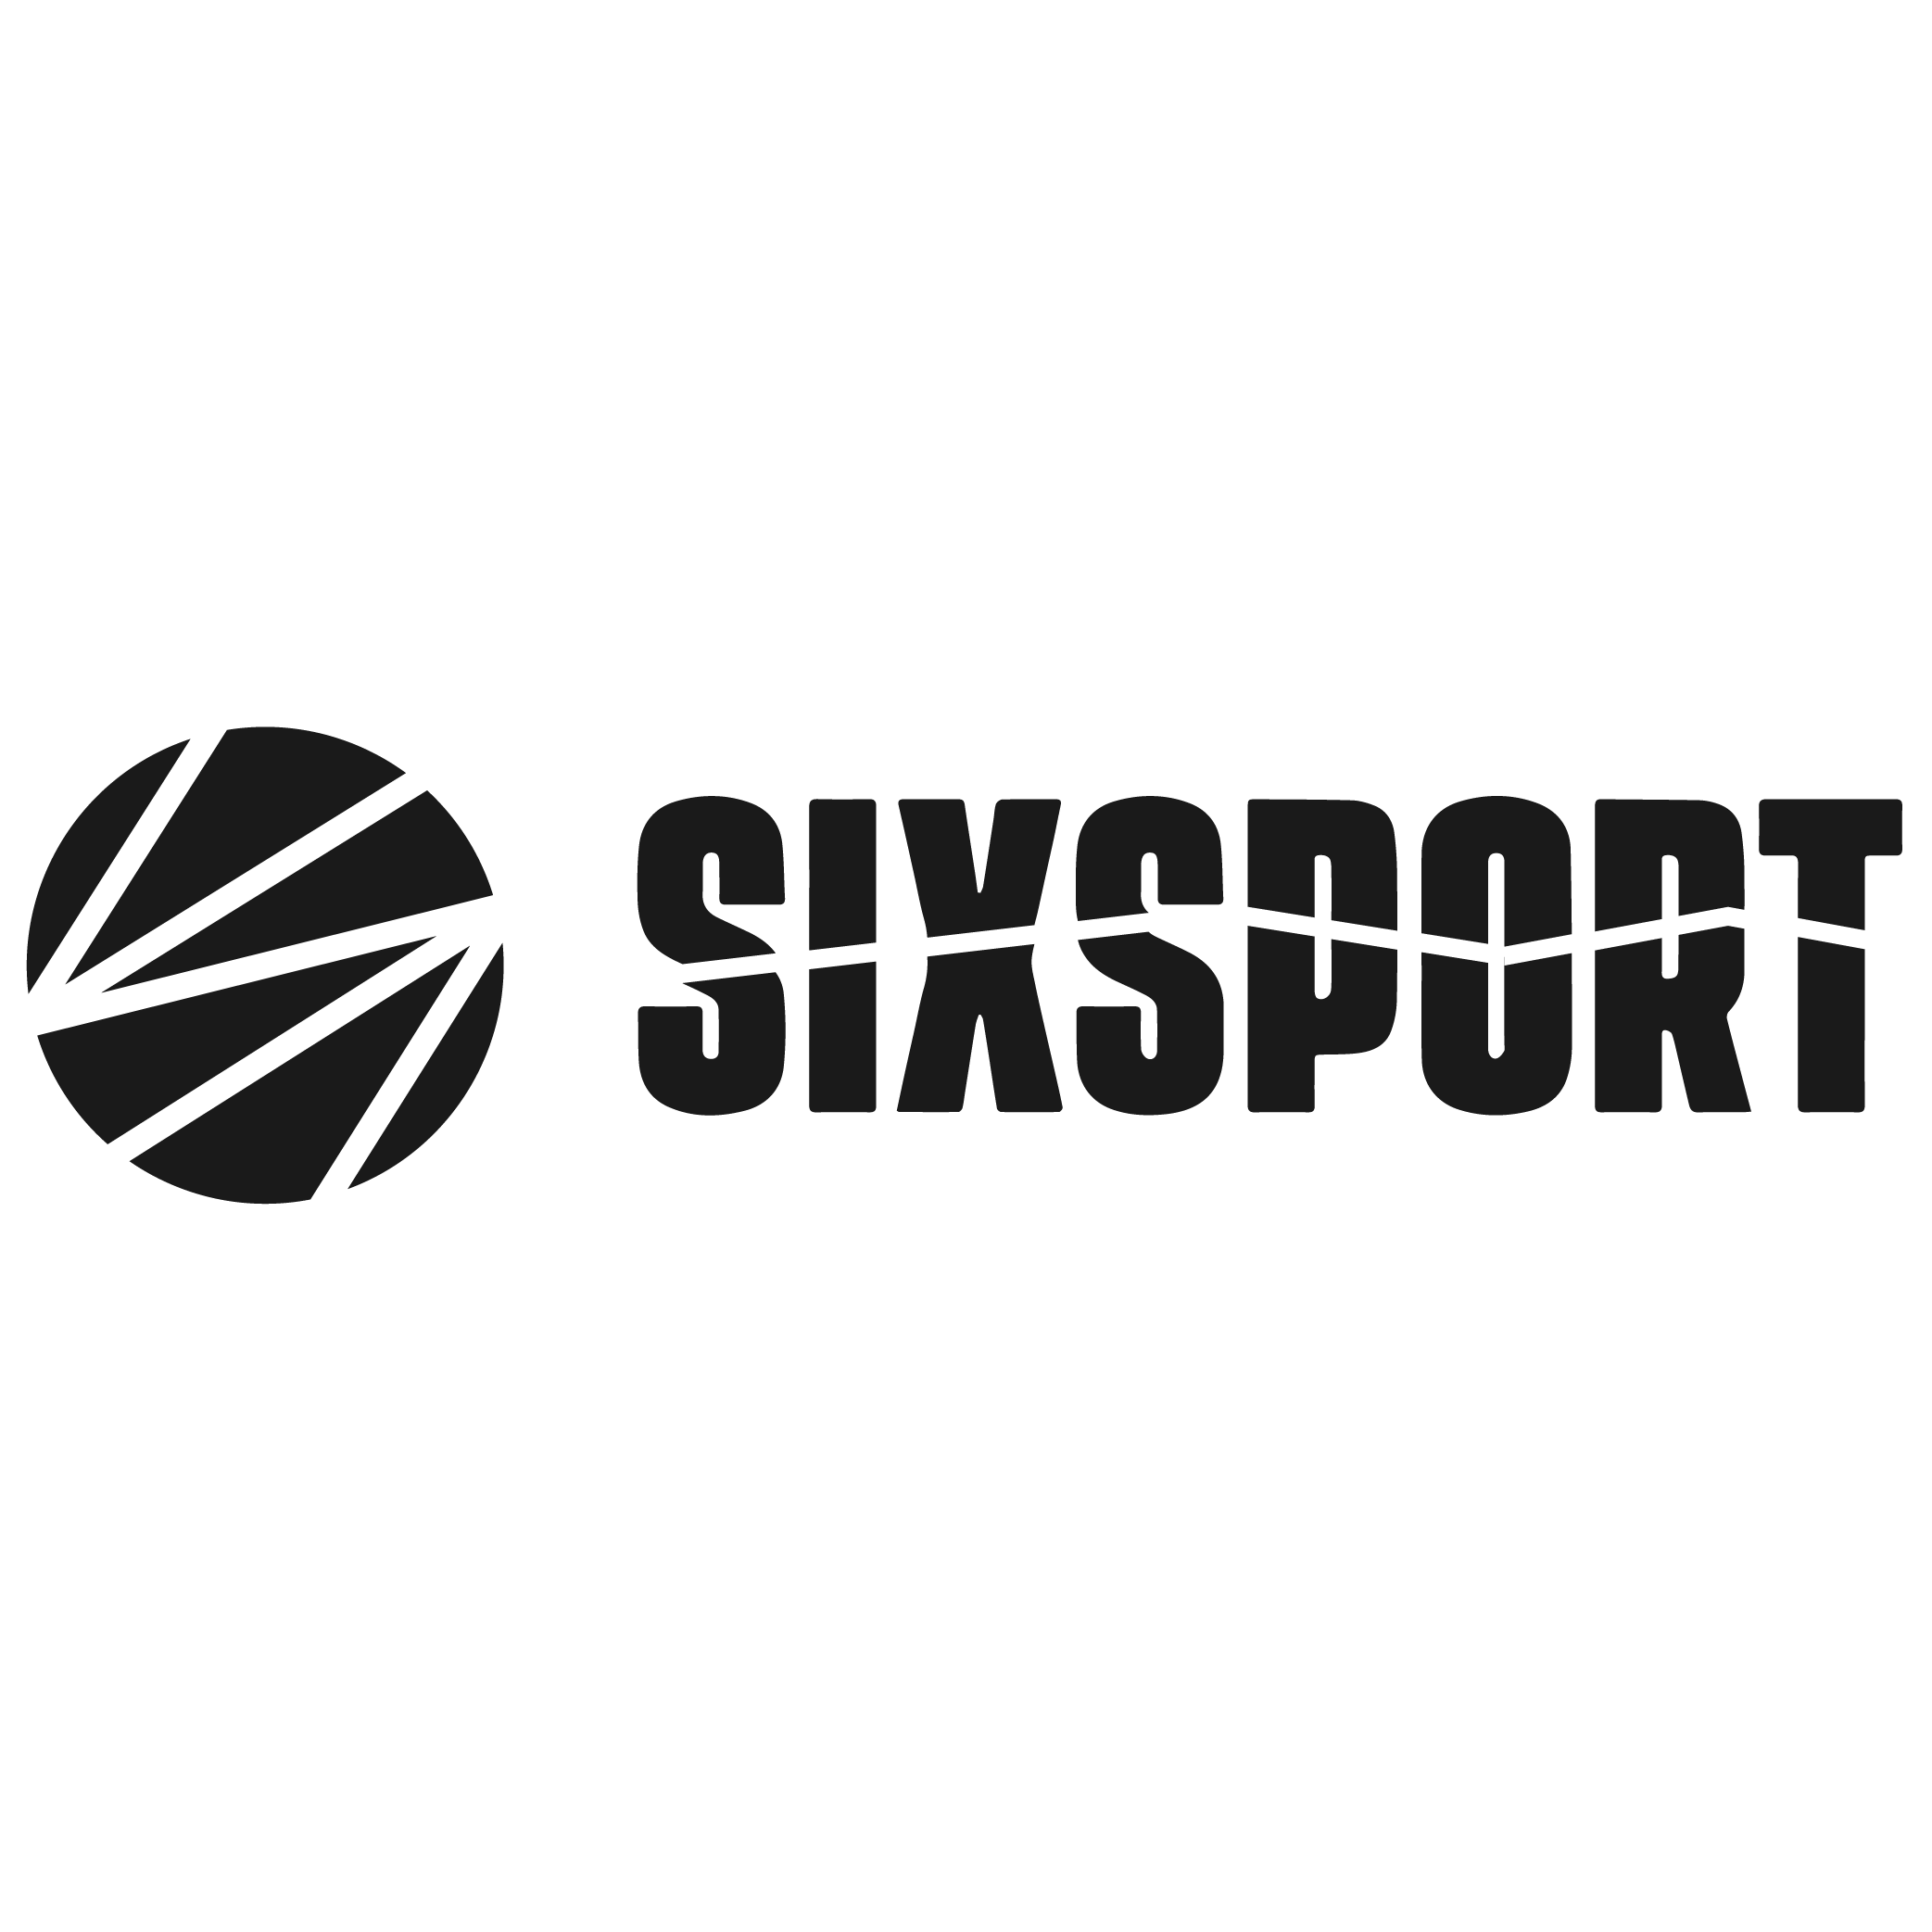 sixsport logo